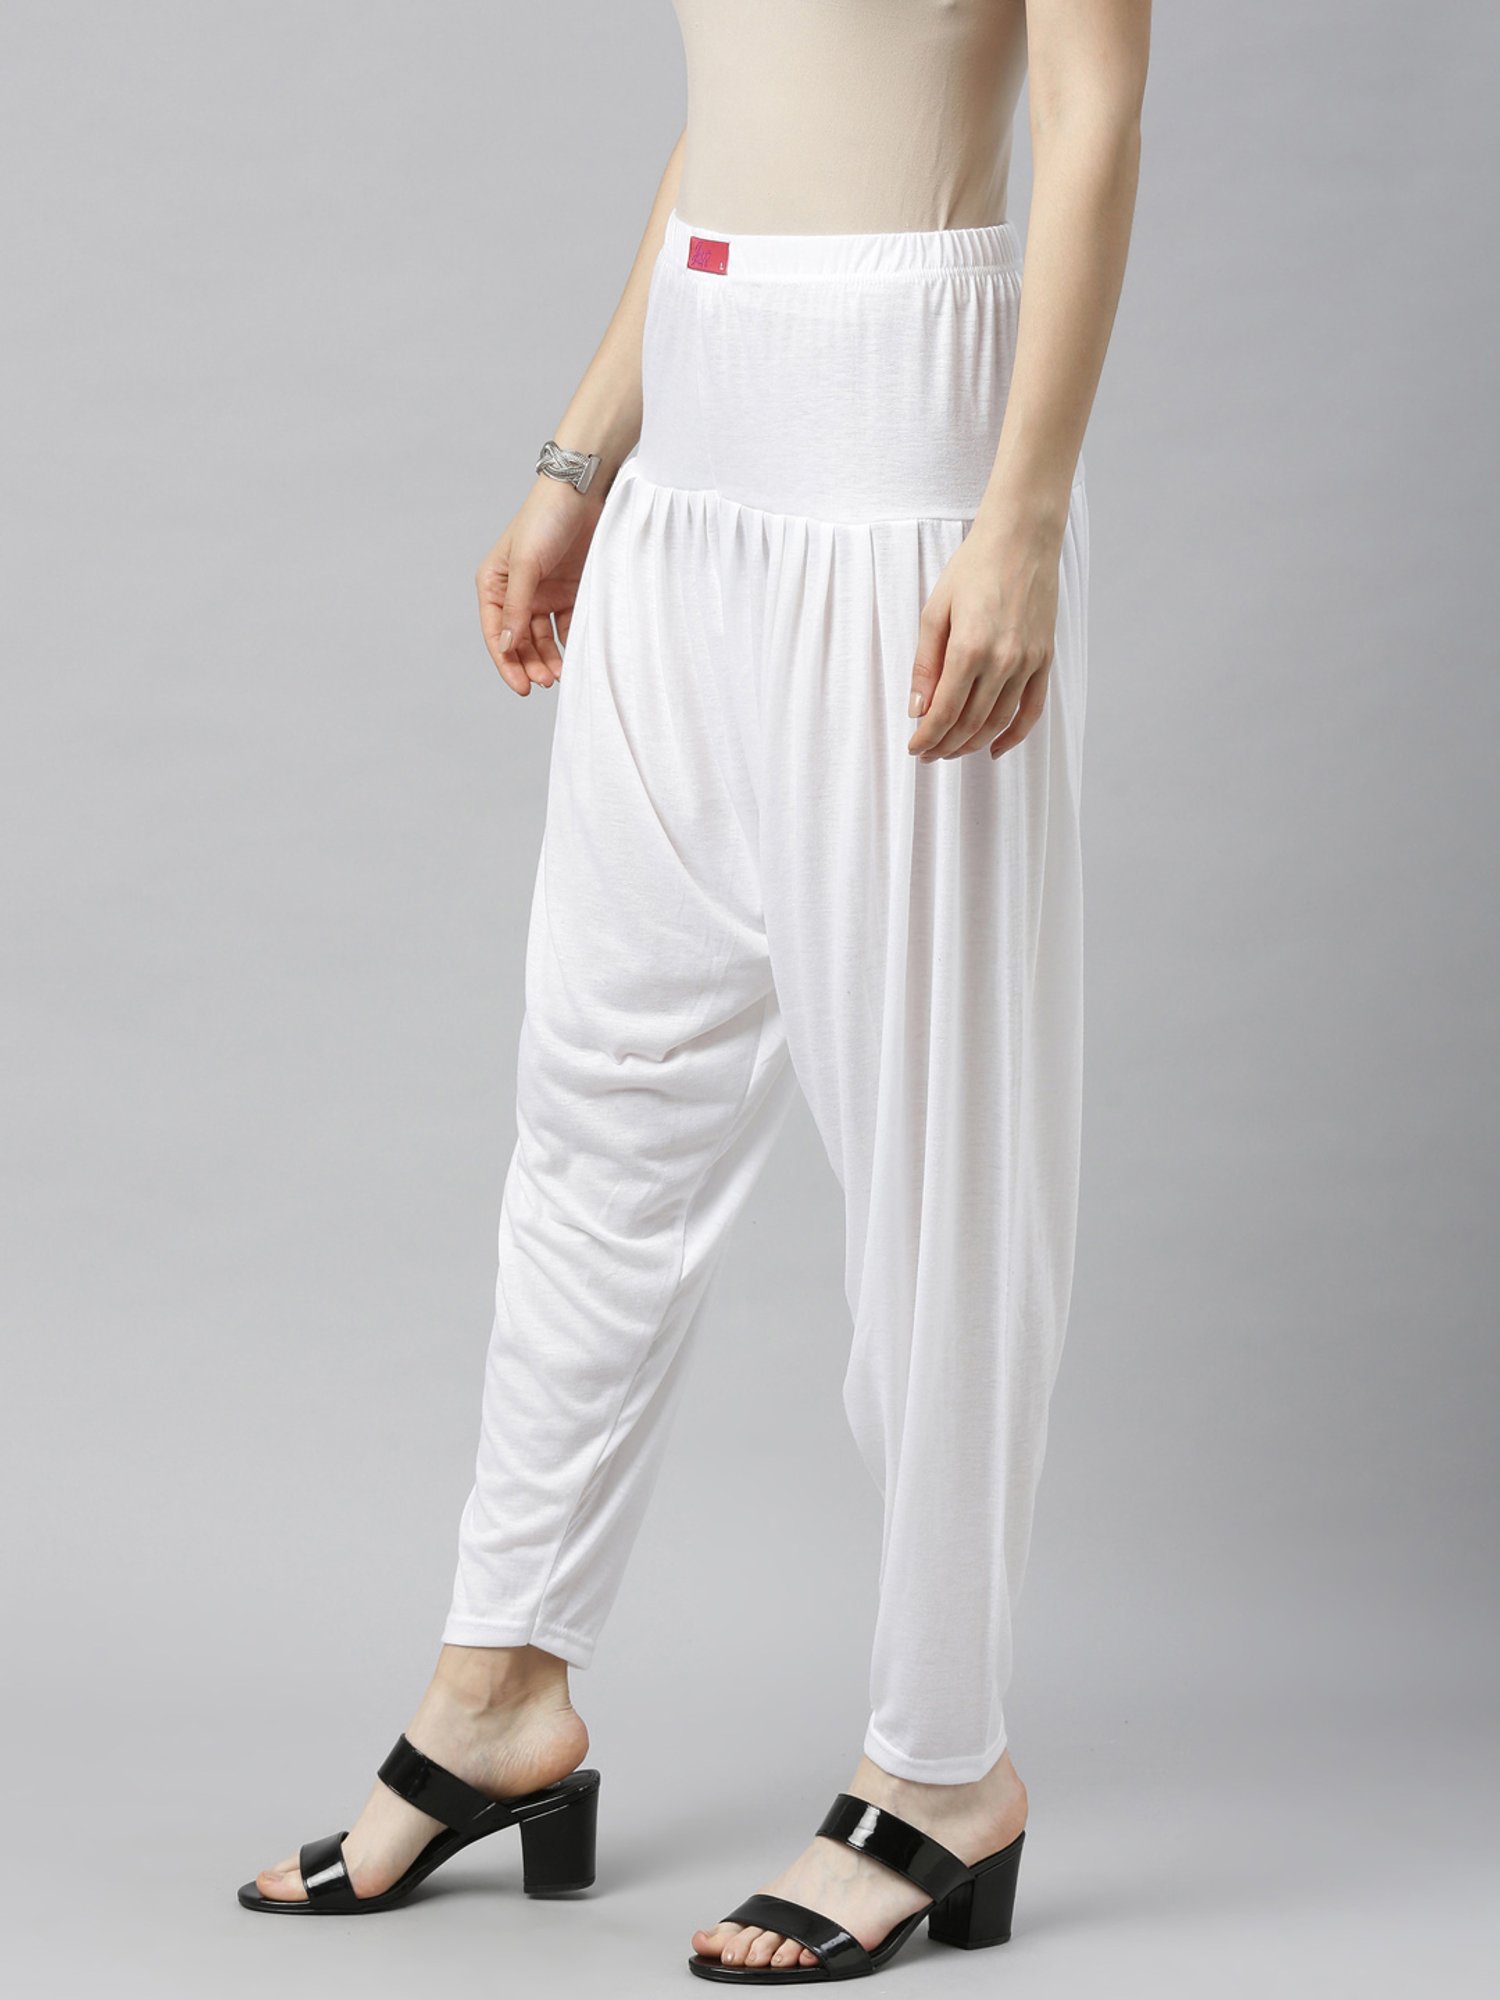 Buy White Salwars  Churidars for Women by Jcss Online  Ajiocom